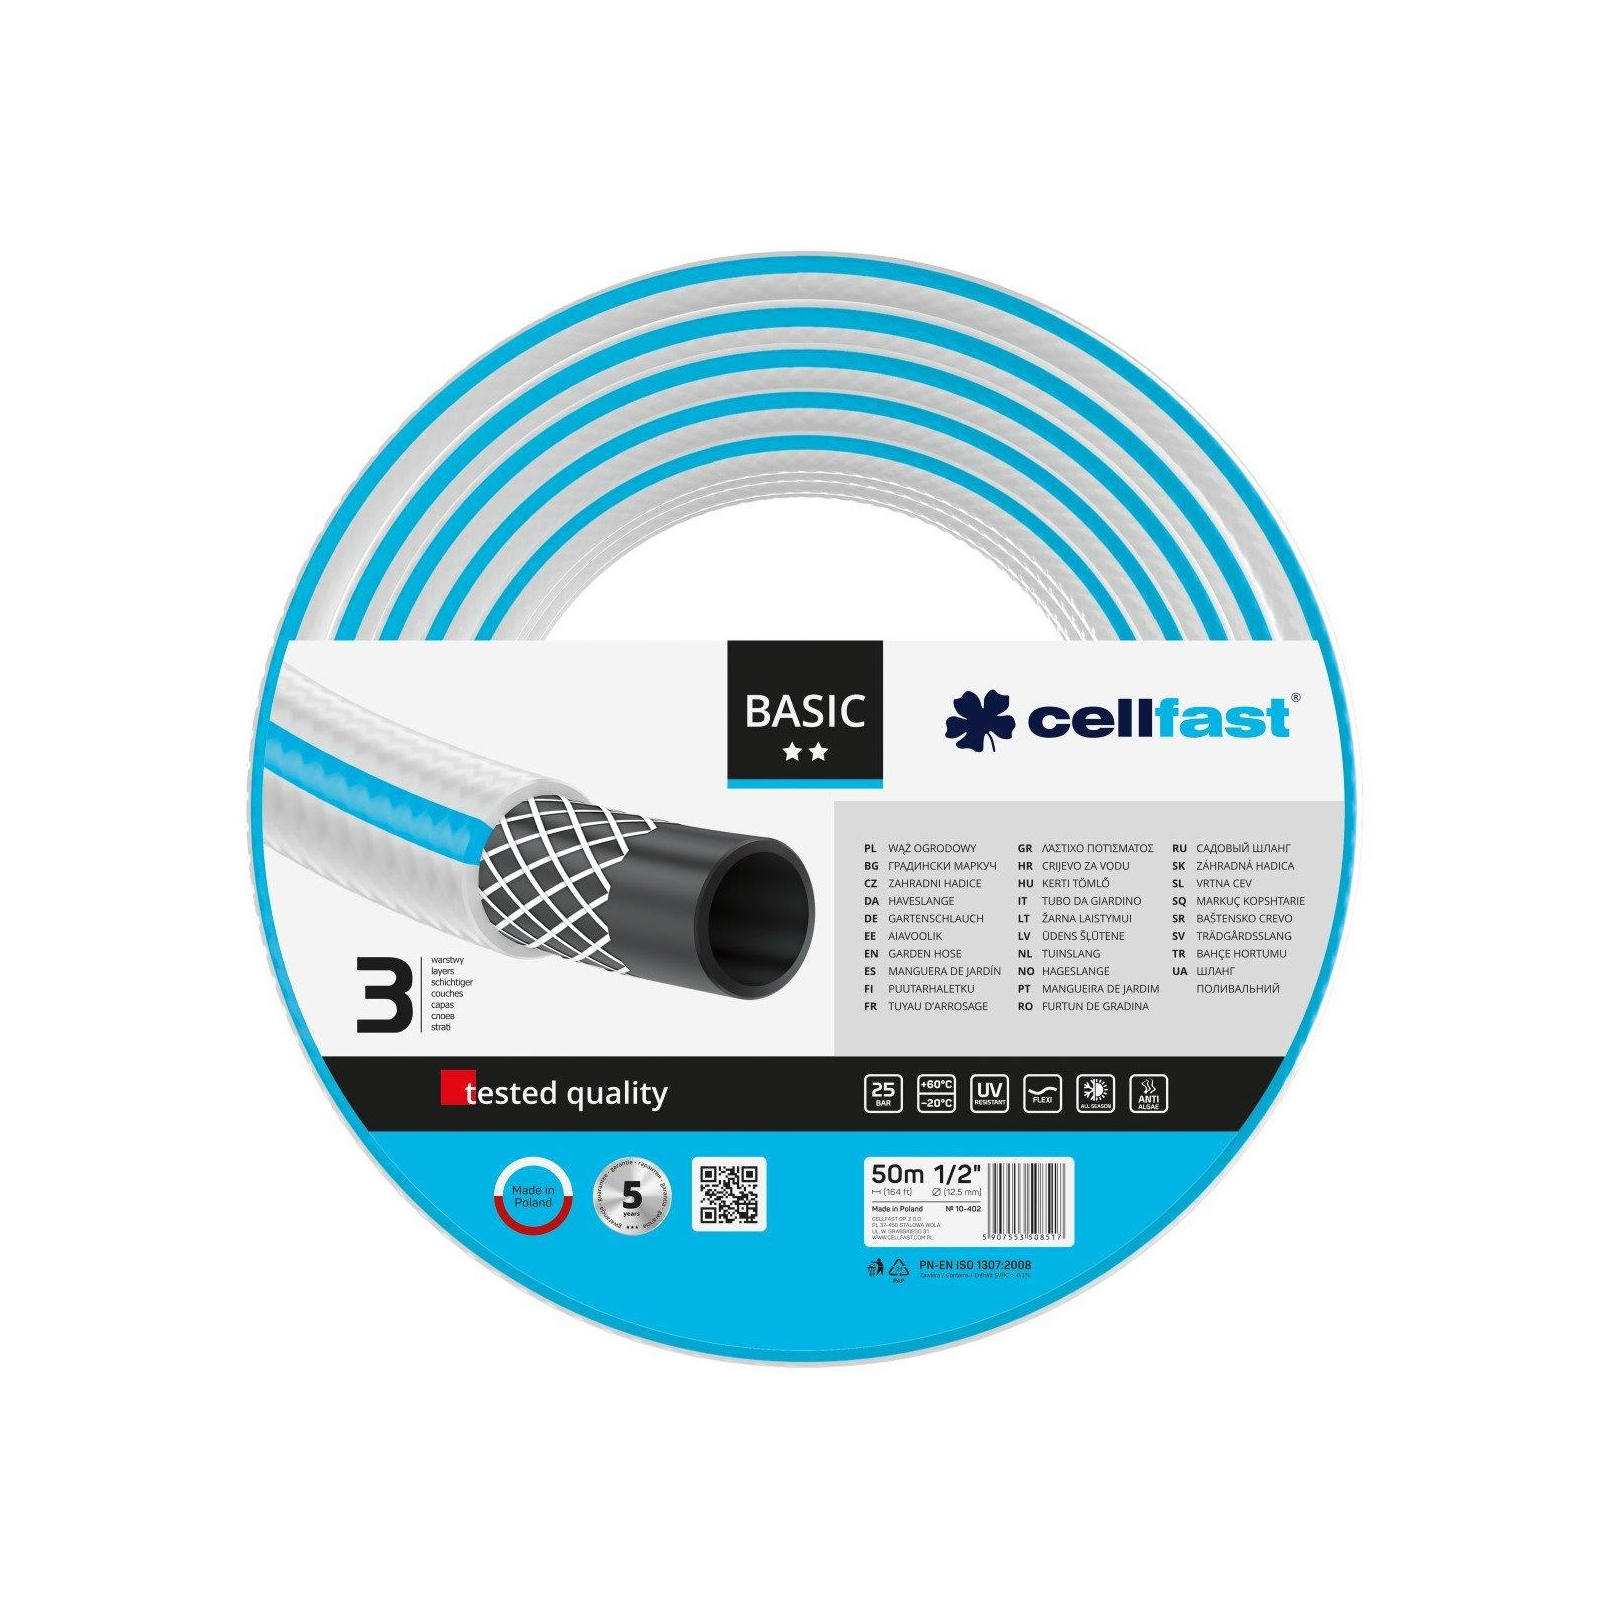 Поливочный шланг Cellfast BASIC, 1/2', 50м, 3 слоя, до 25 Бар, -20…+60°C (10-402)